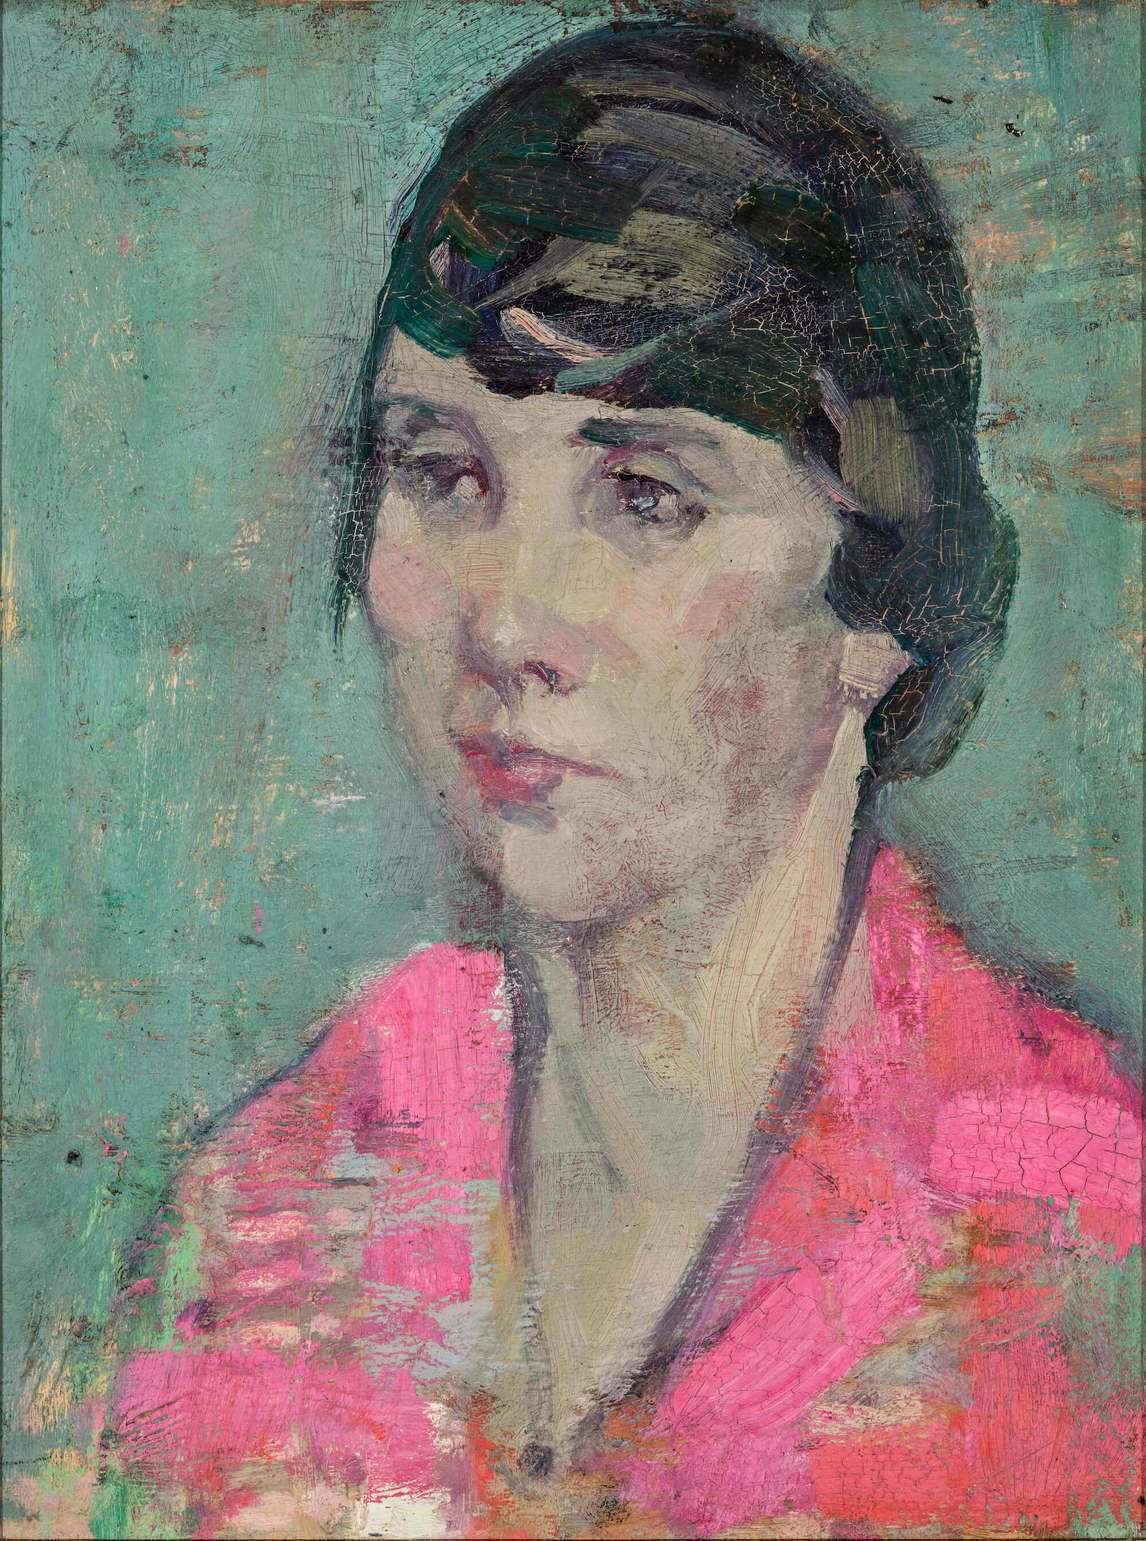 Art Canada Institute, Prudence Heward, Untitled, c. 1925, possible self-portrait